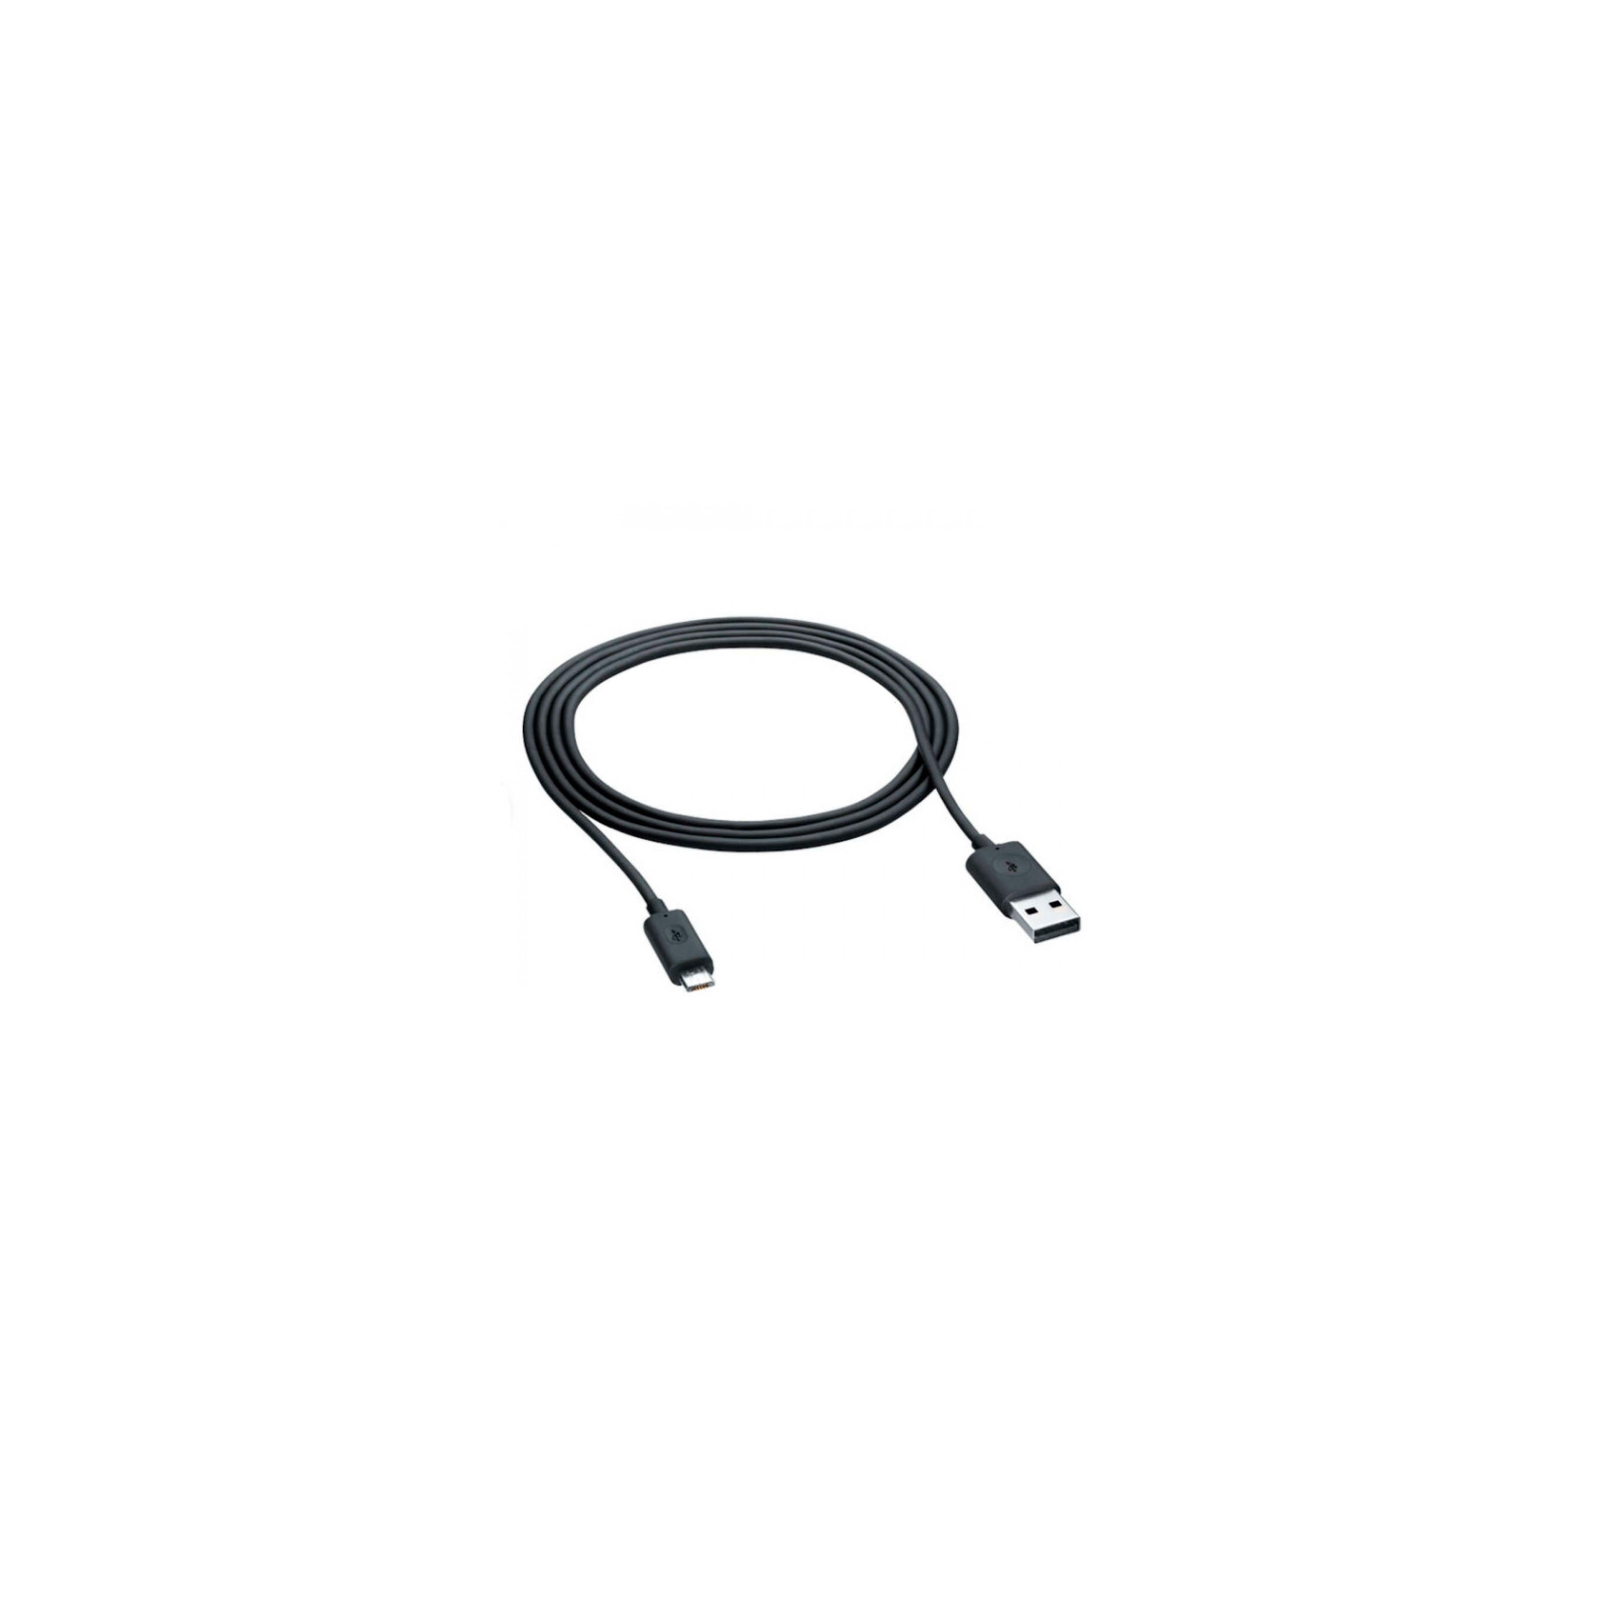 Дата кабель USB 2.0 AM to Micro 5P 1.0m Black Optima (41033)